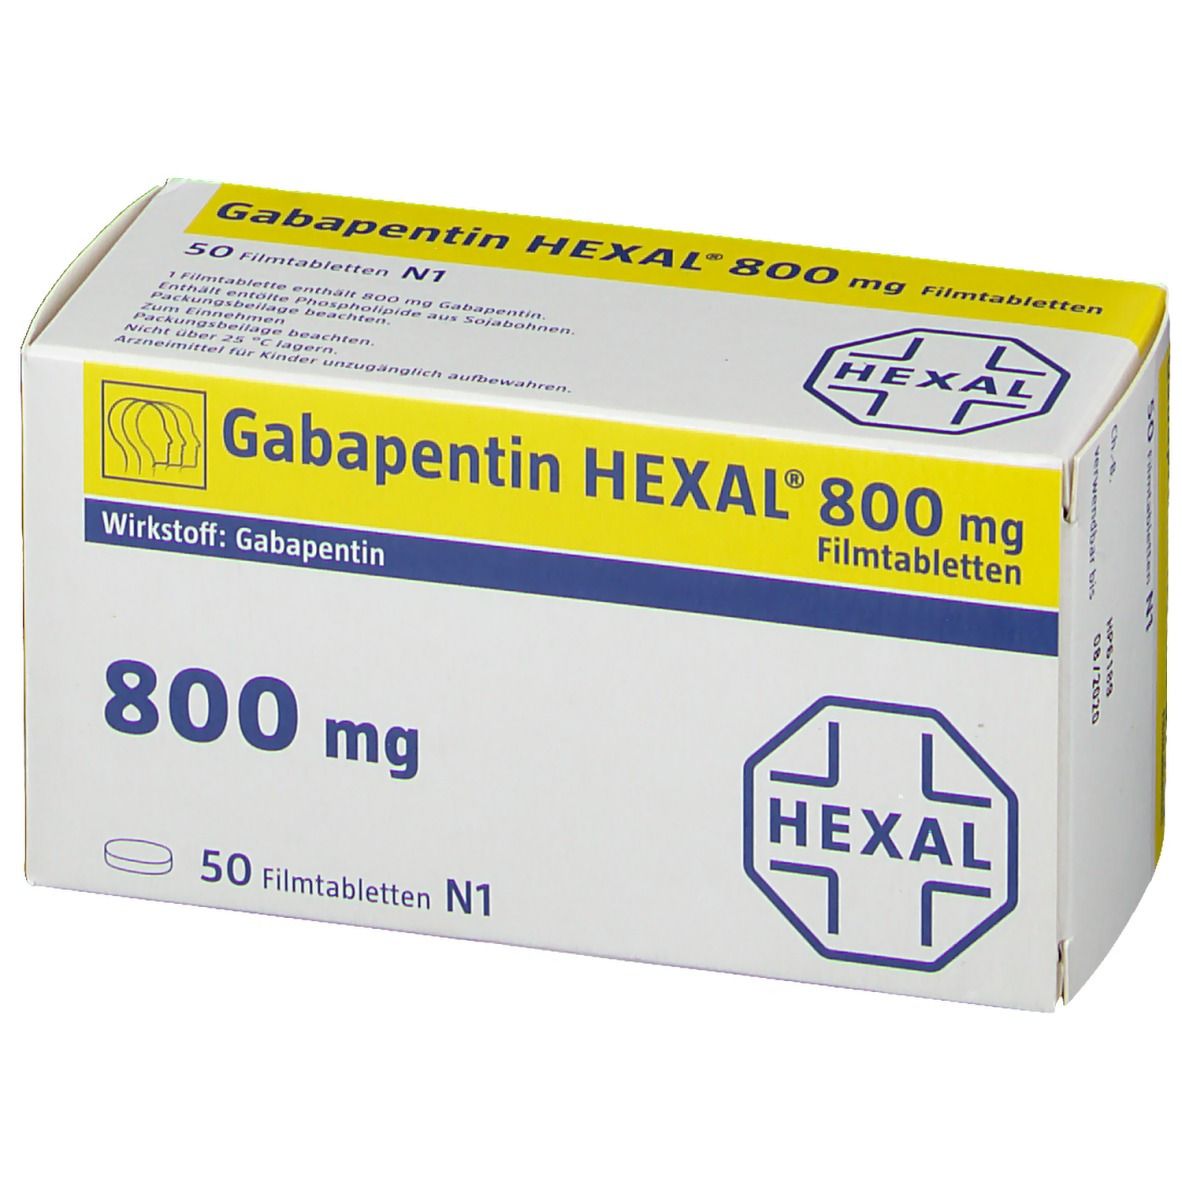 Gabapentin HEXAL® 800 mg